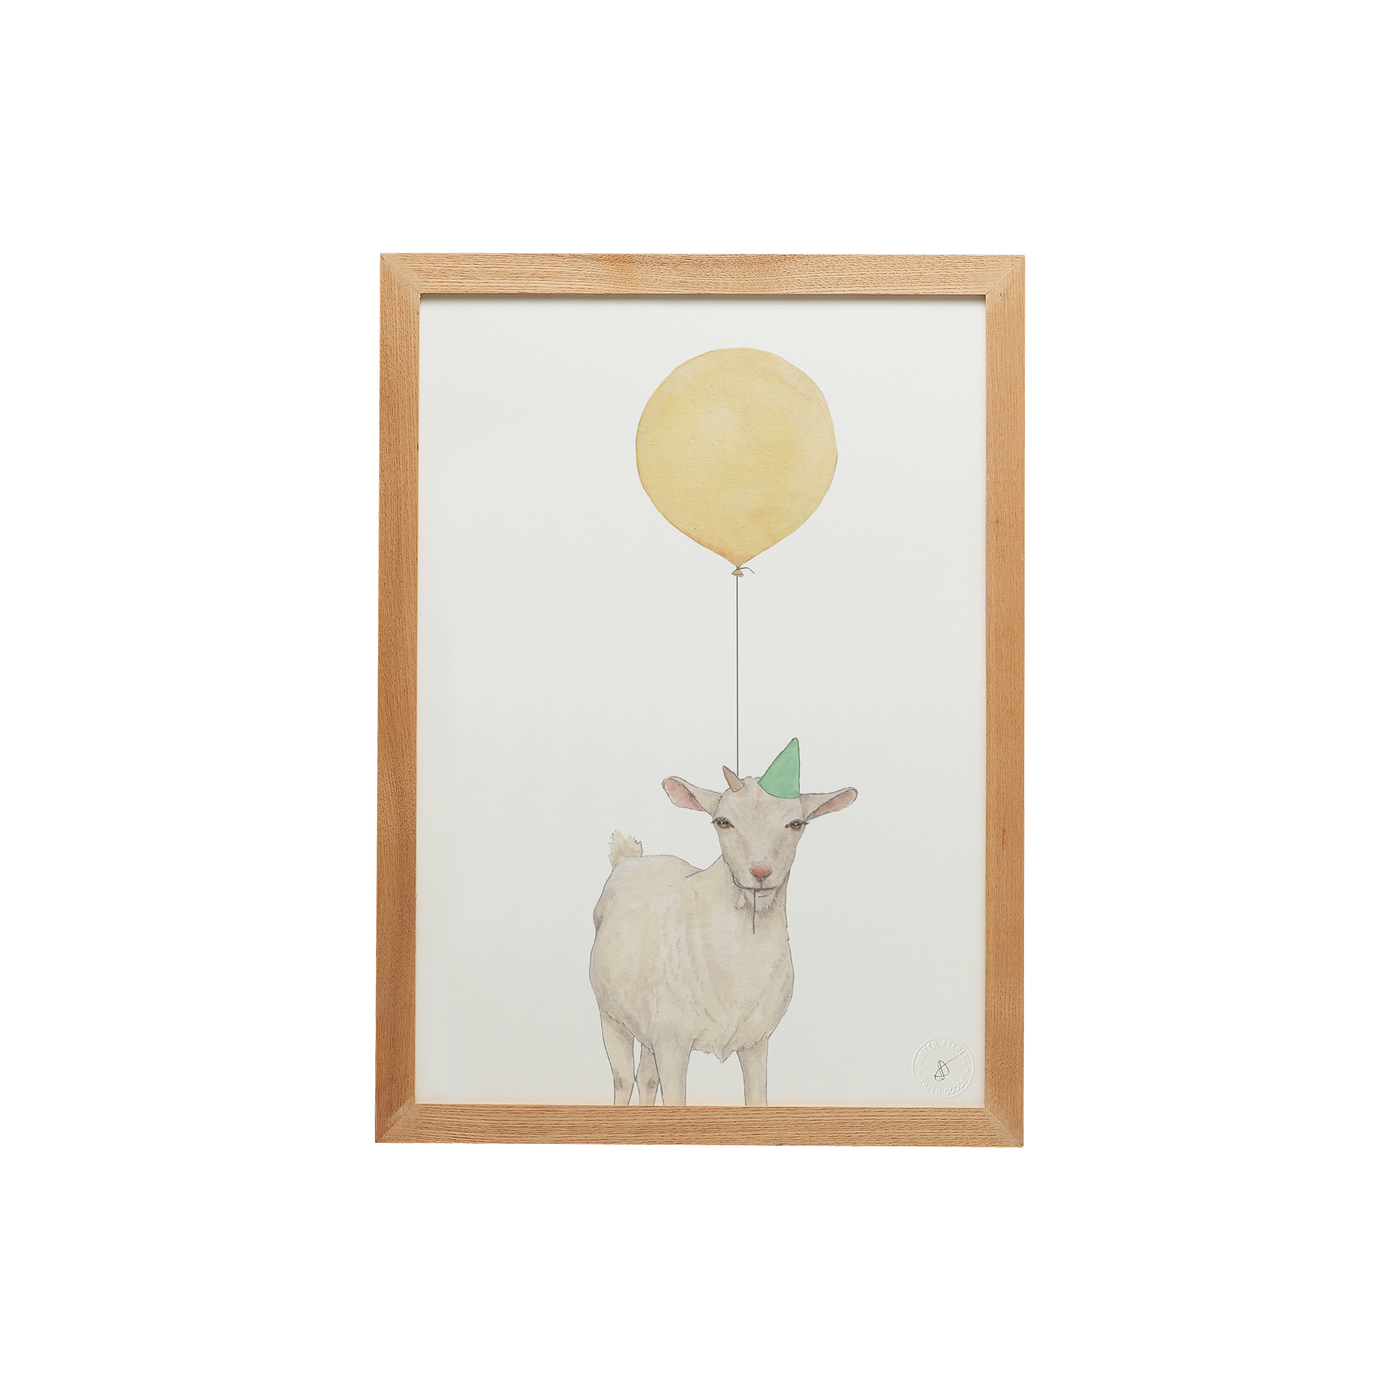 Balloon Animal Goat Print cut out